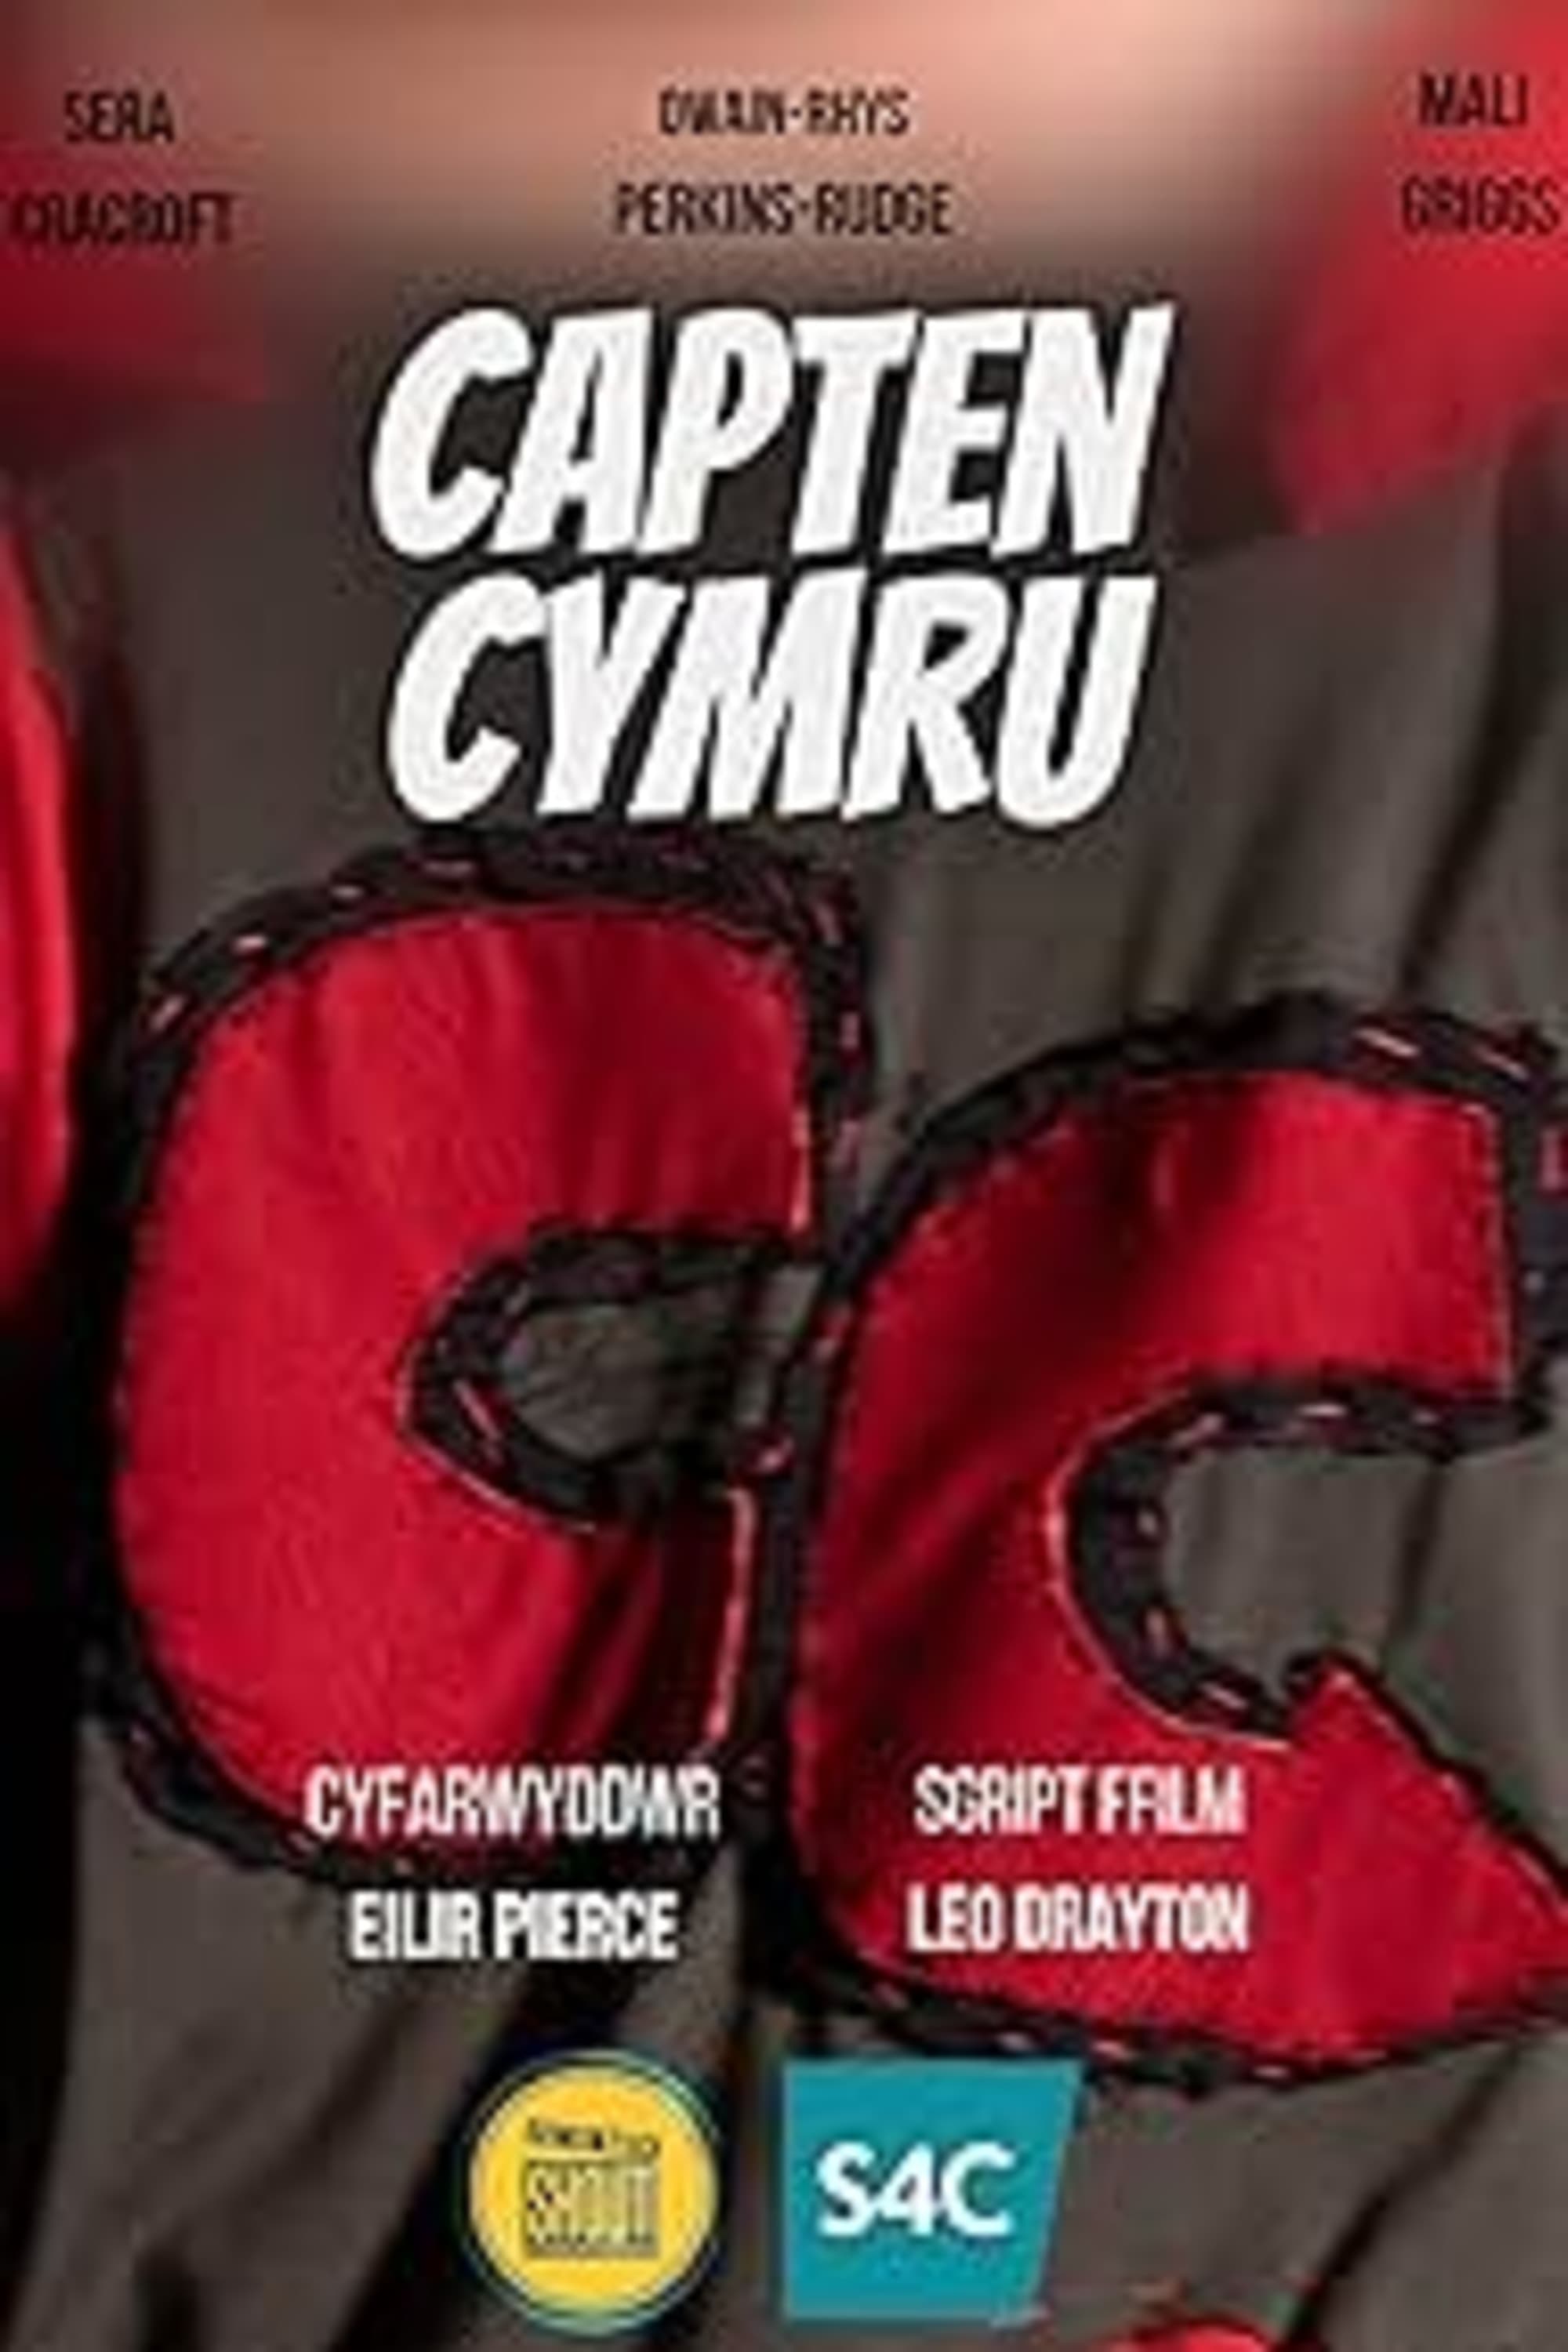 Capten Cymru